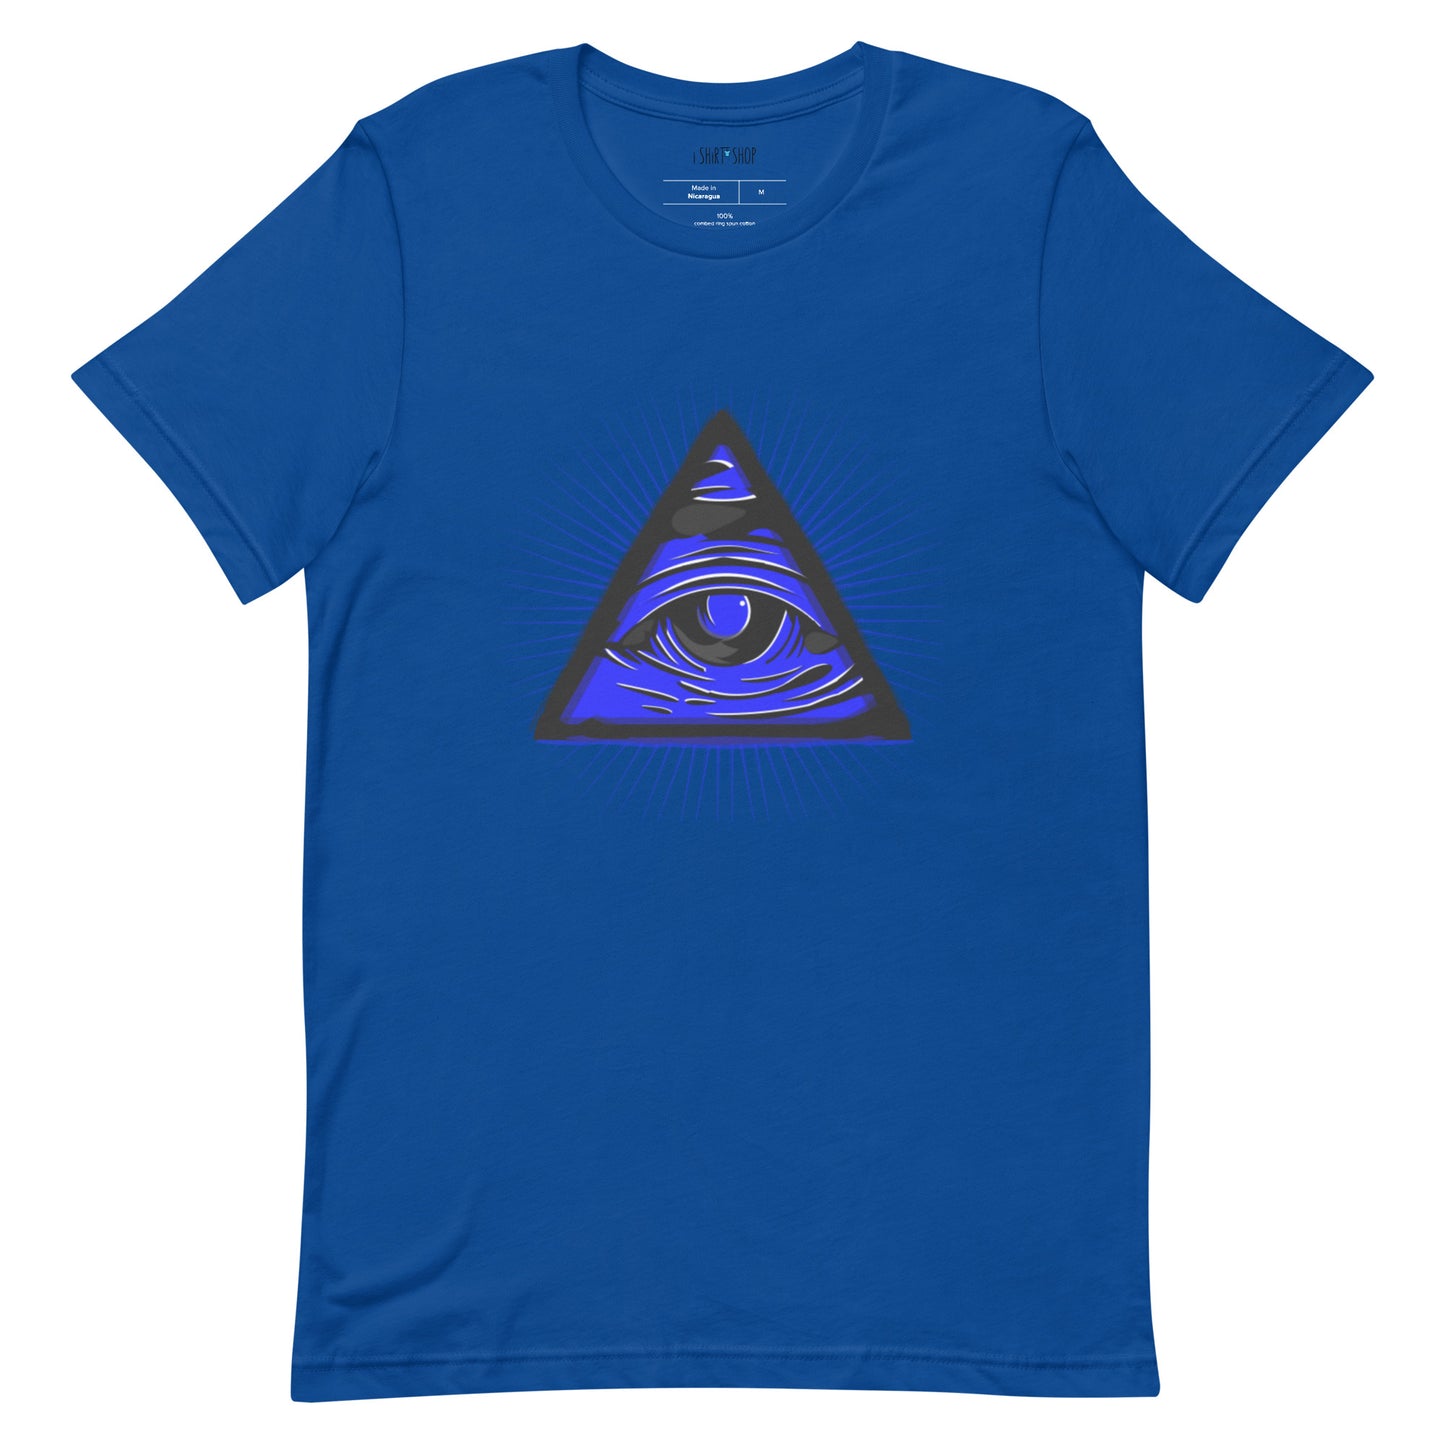 Blue Eye Triangle Unisex T-Shirt